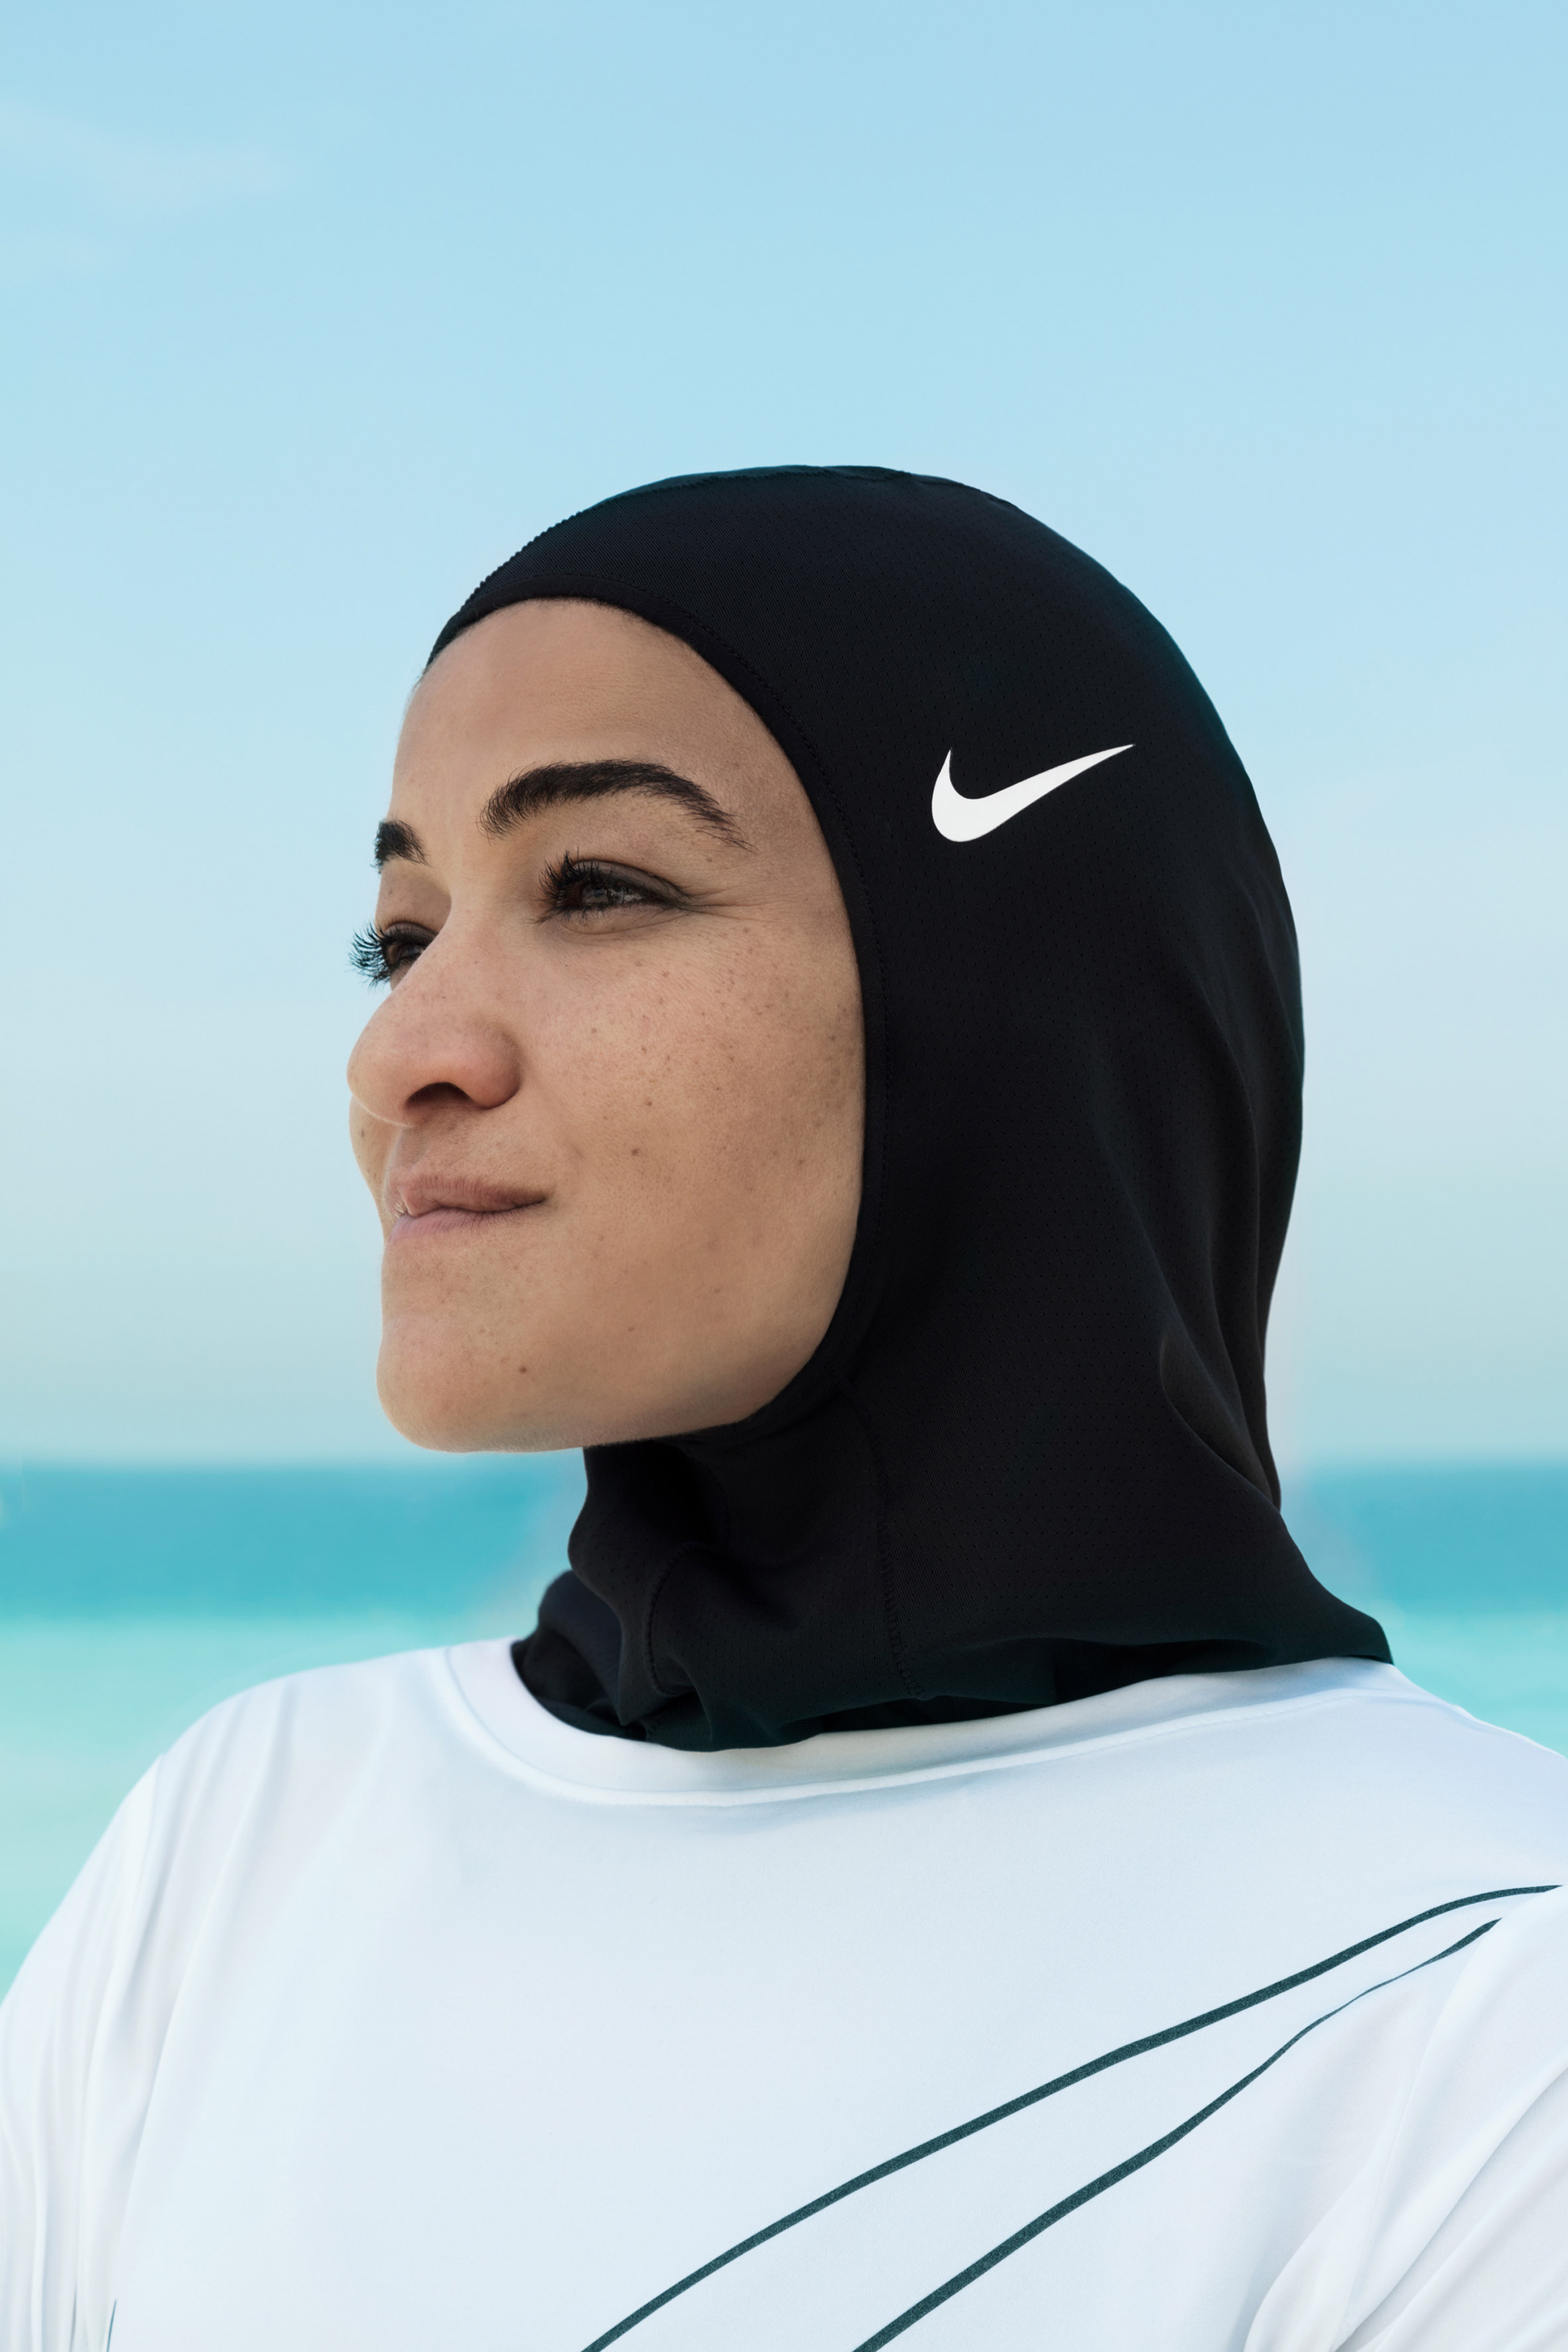 Nike Pro Hijab for Muslim athletes